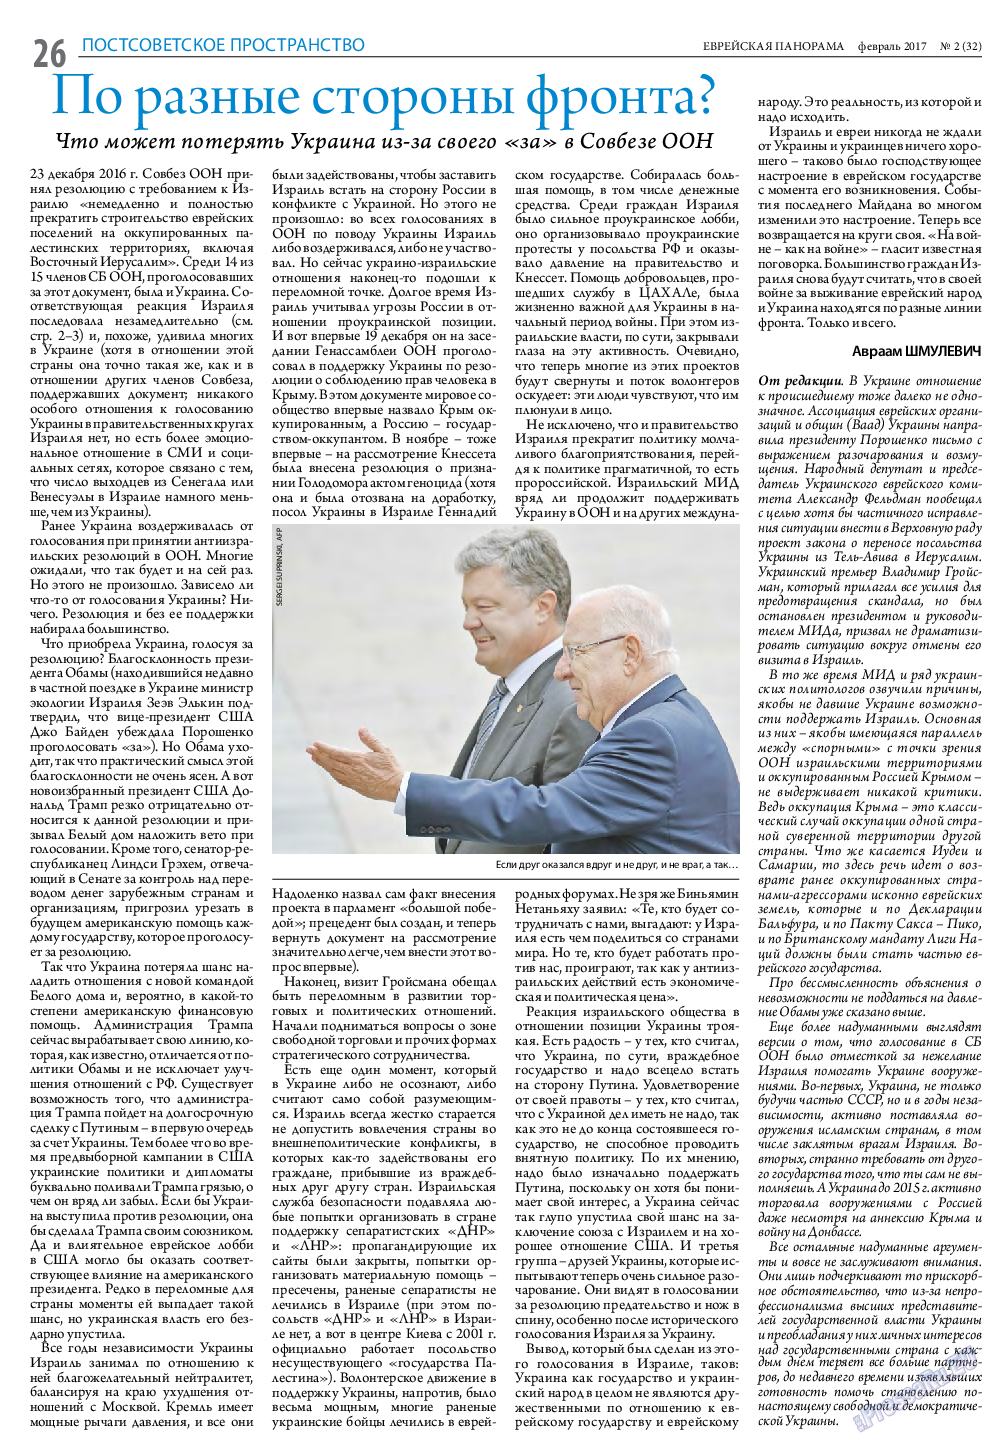 Еврейская панорама, газета. 2017 №2 стр.26